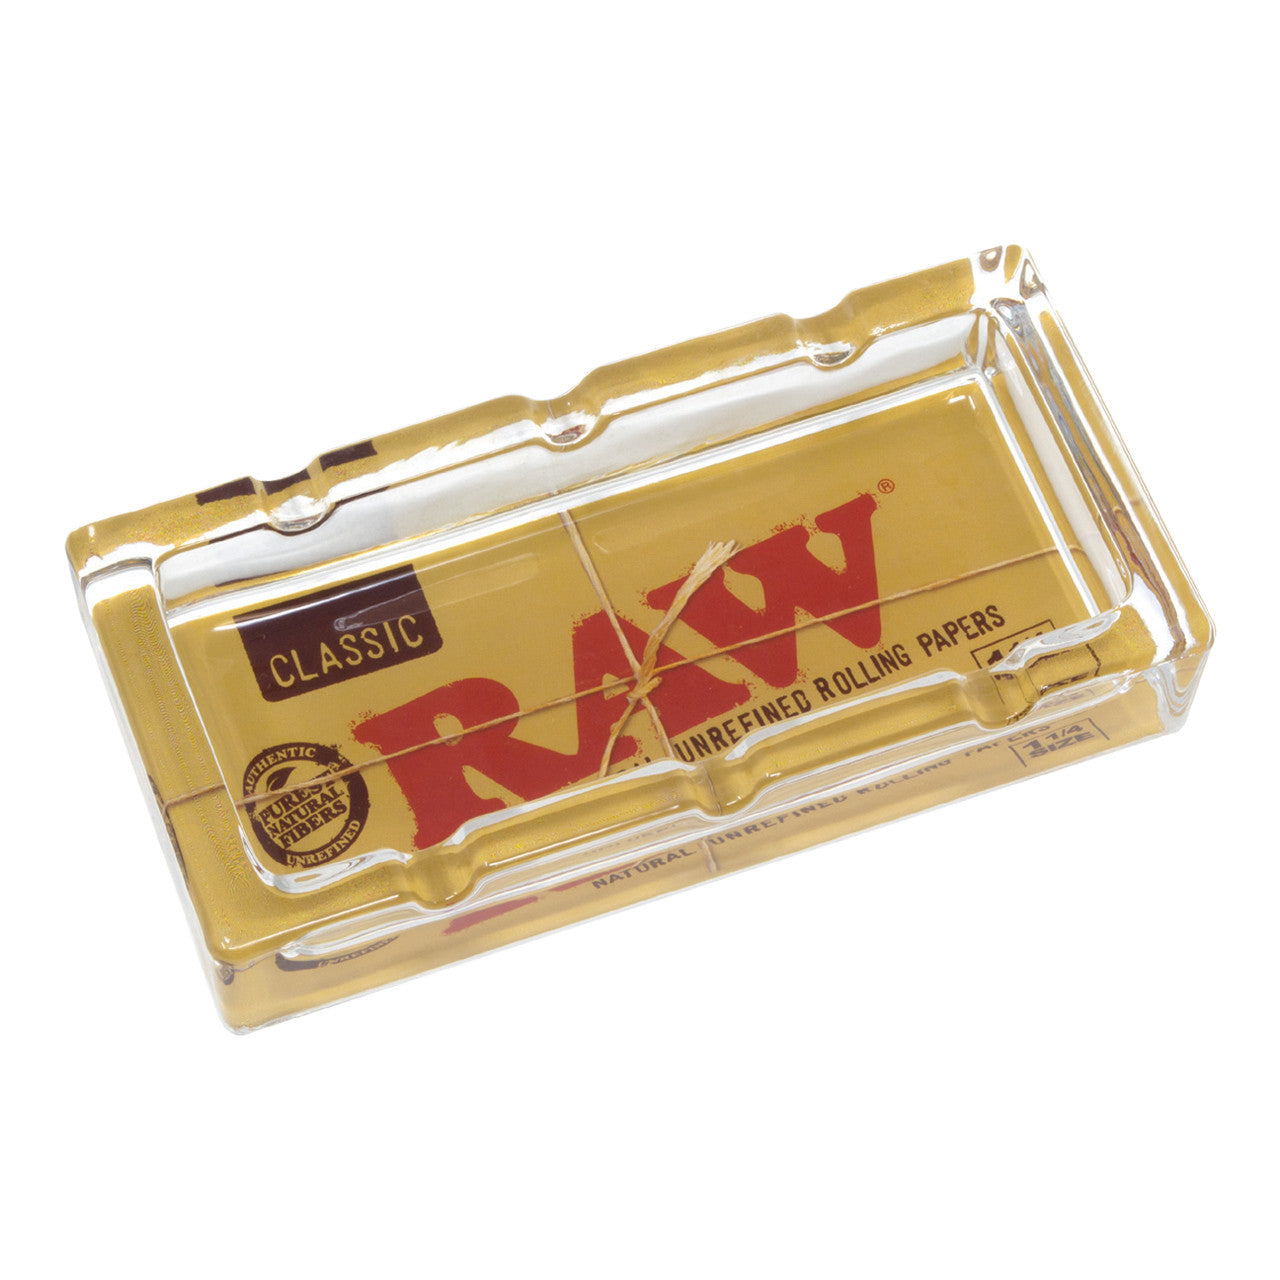 raw classic pack glass ashtray